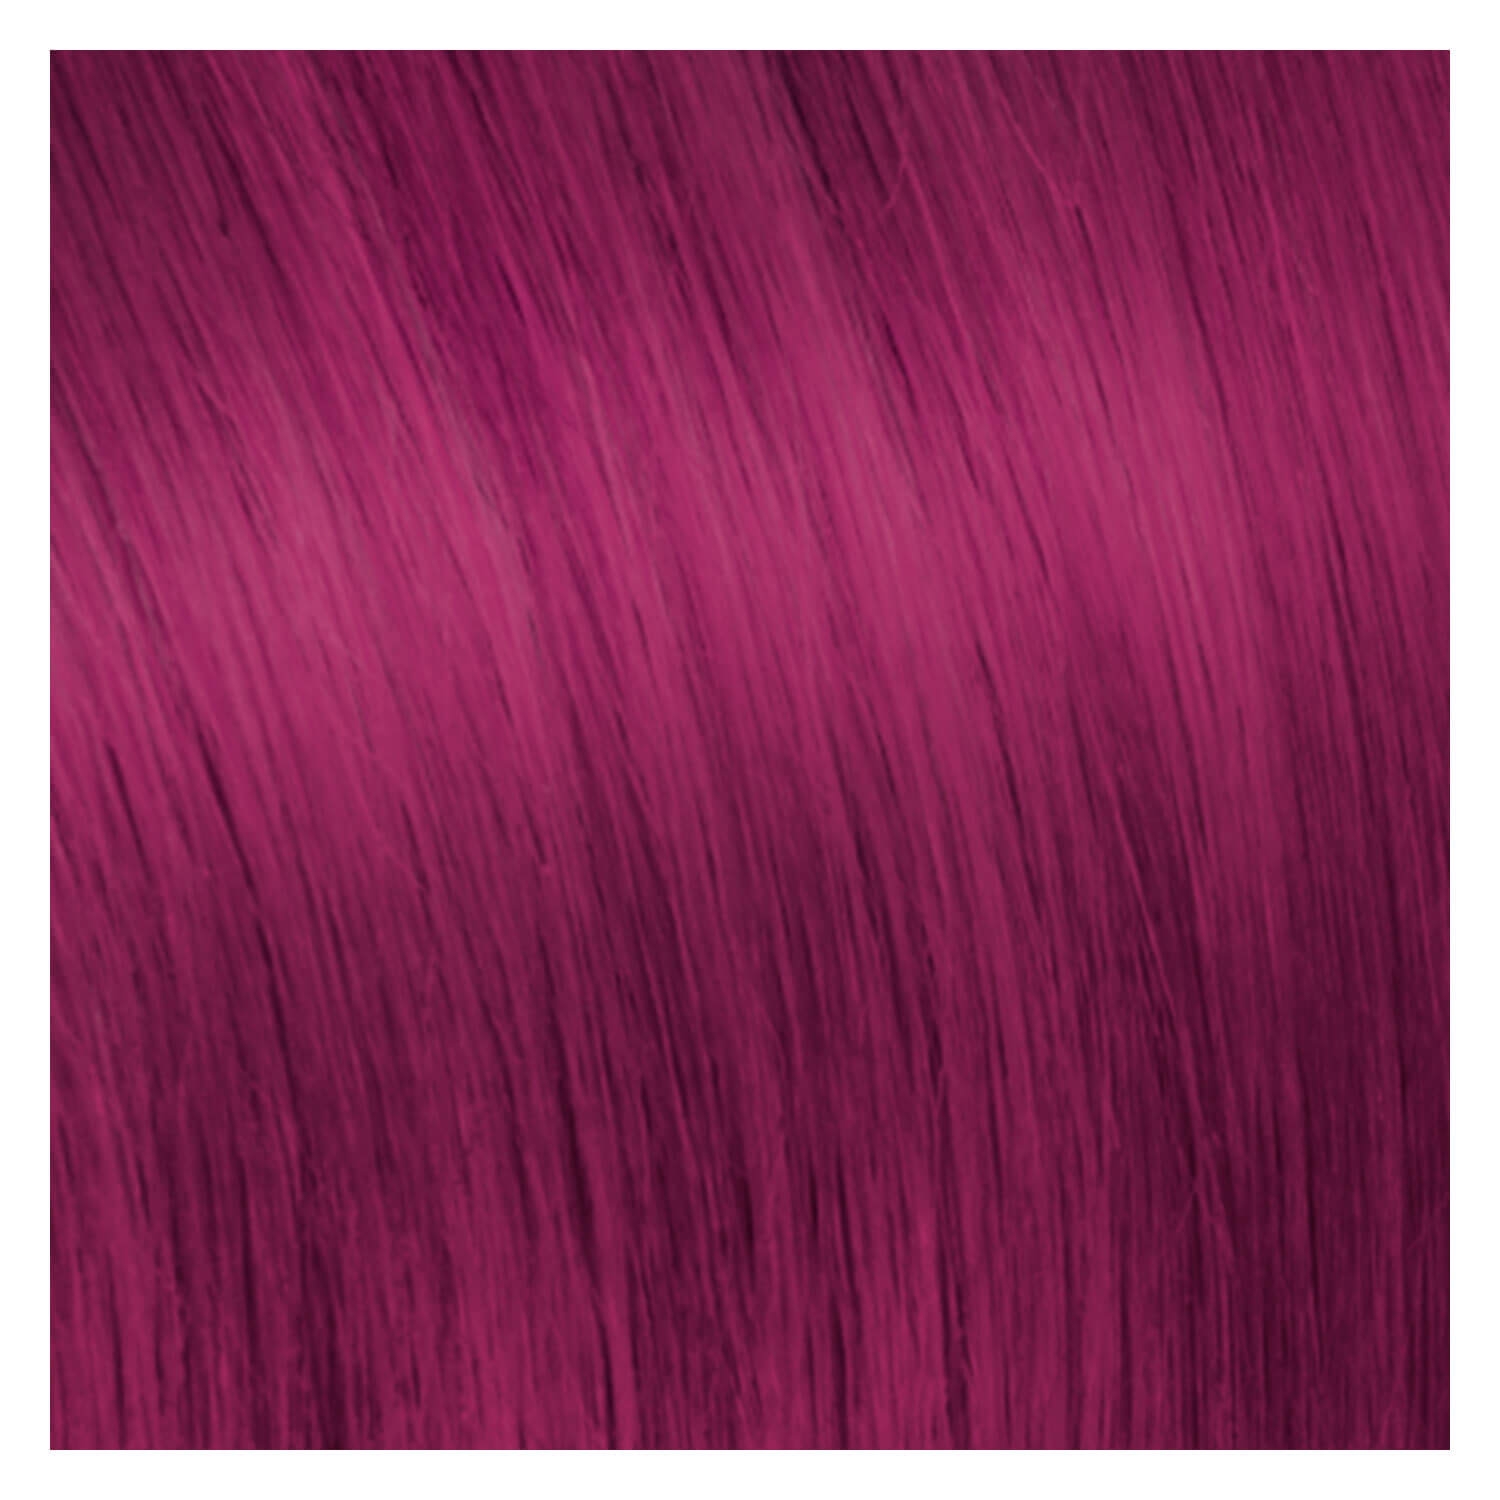 Image du produit de SHE Bonding-System Hair Extensions Fantasy Straight - Rötlich Violett 55/60cm